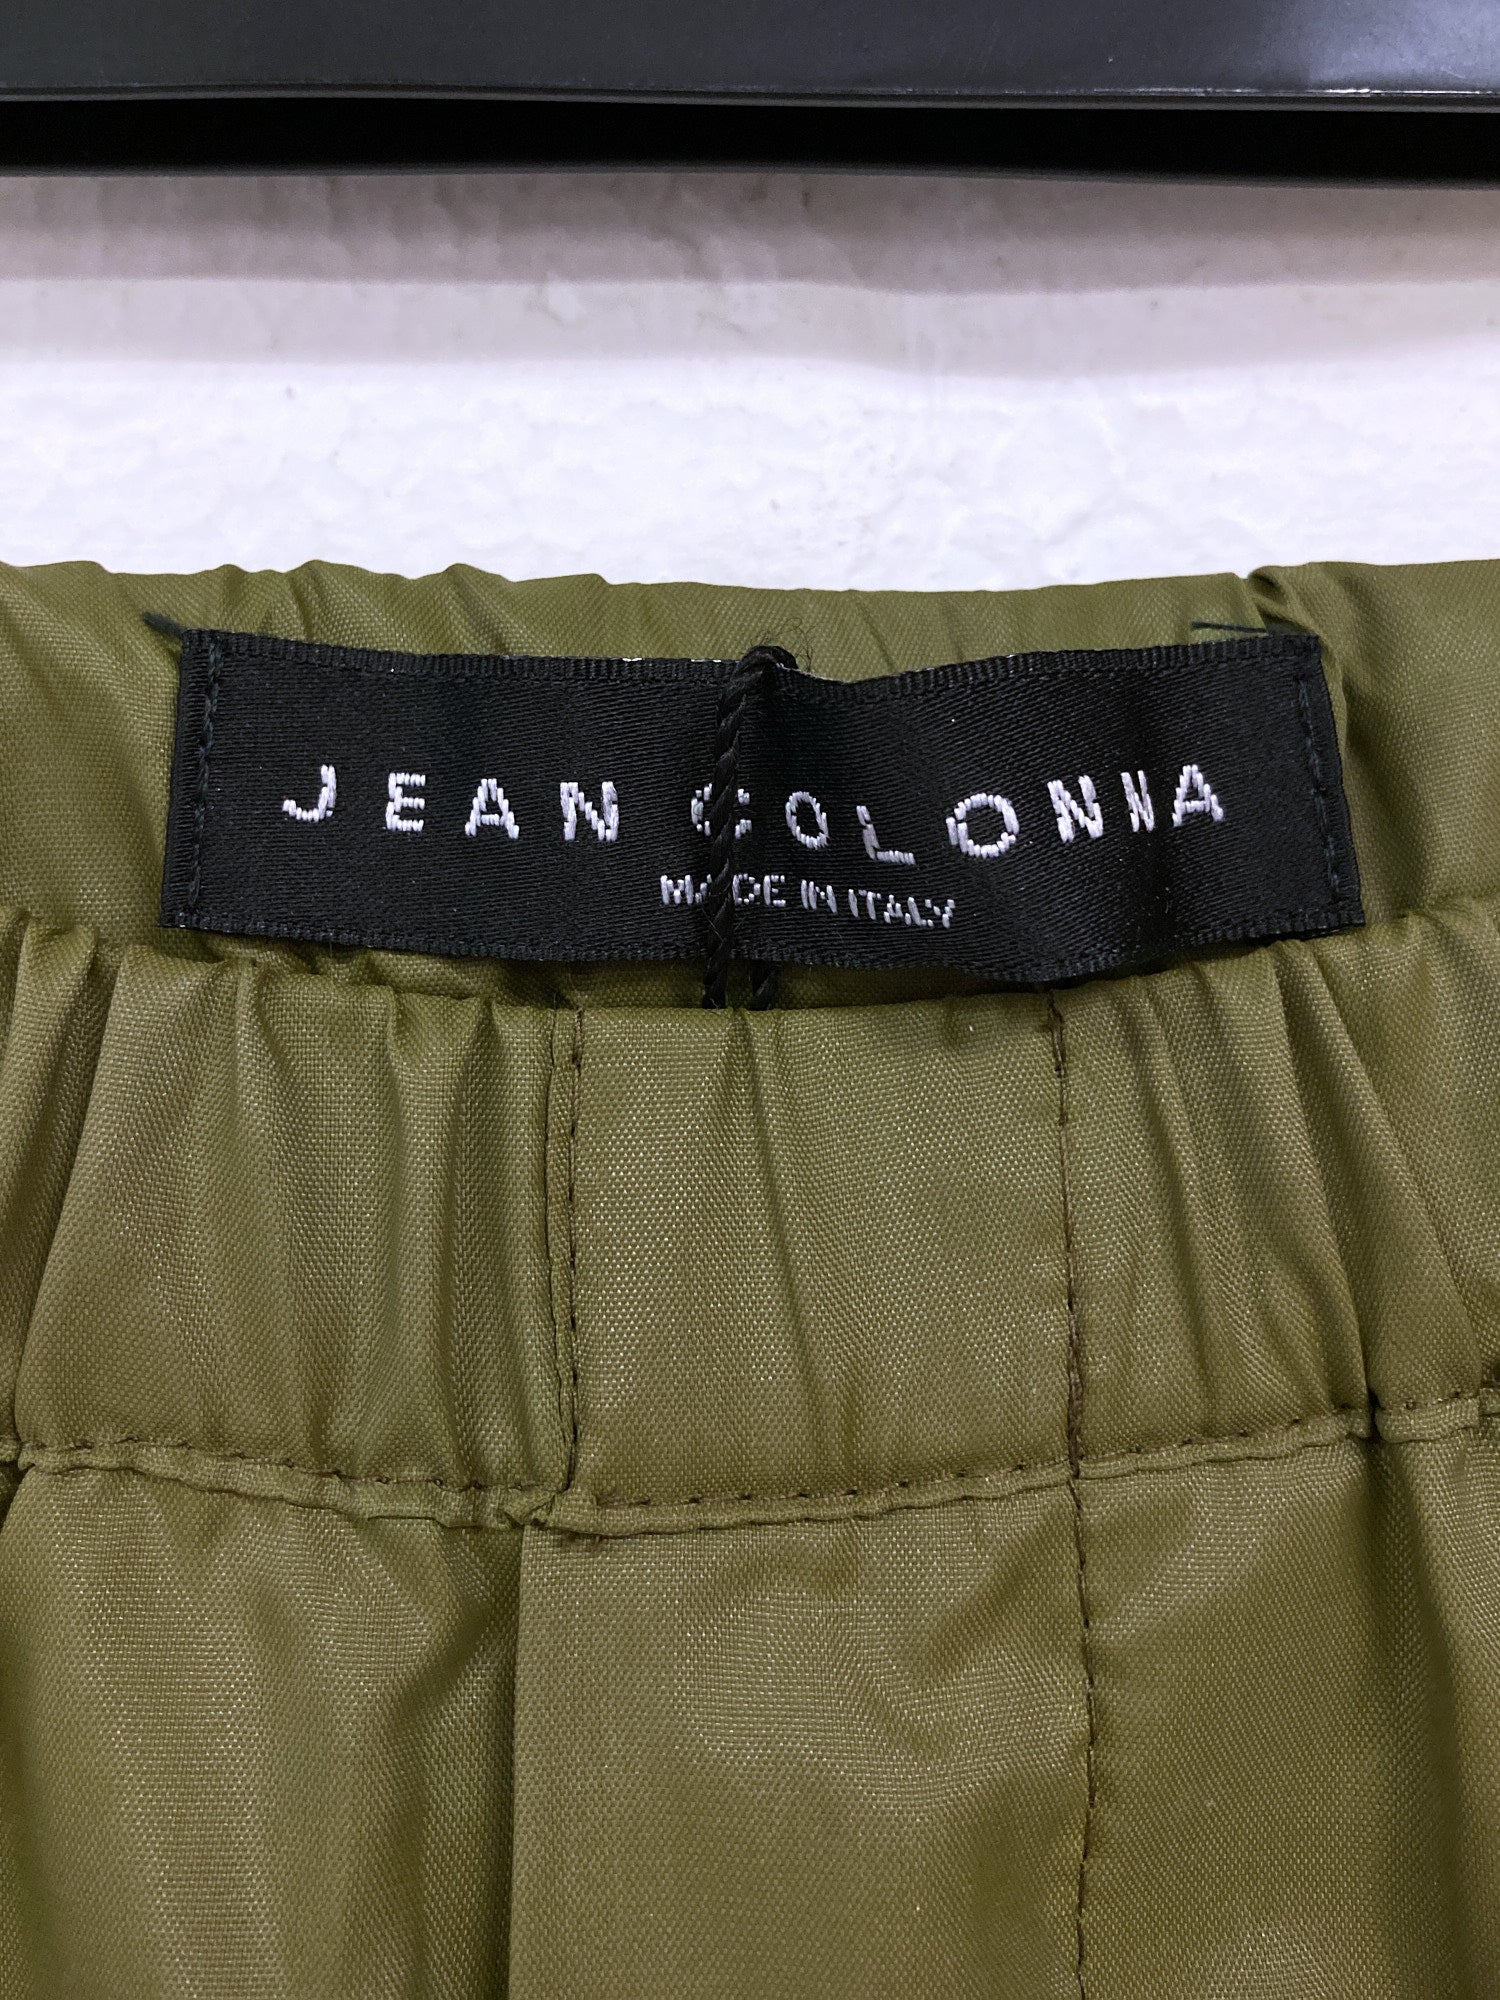 Jean Colonna khaki nylon zip-off leg trousers or shorts - size 44